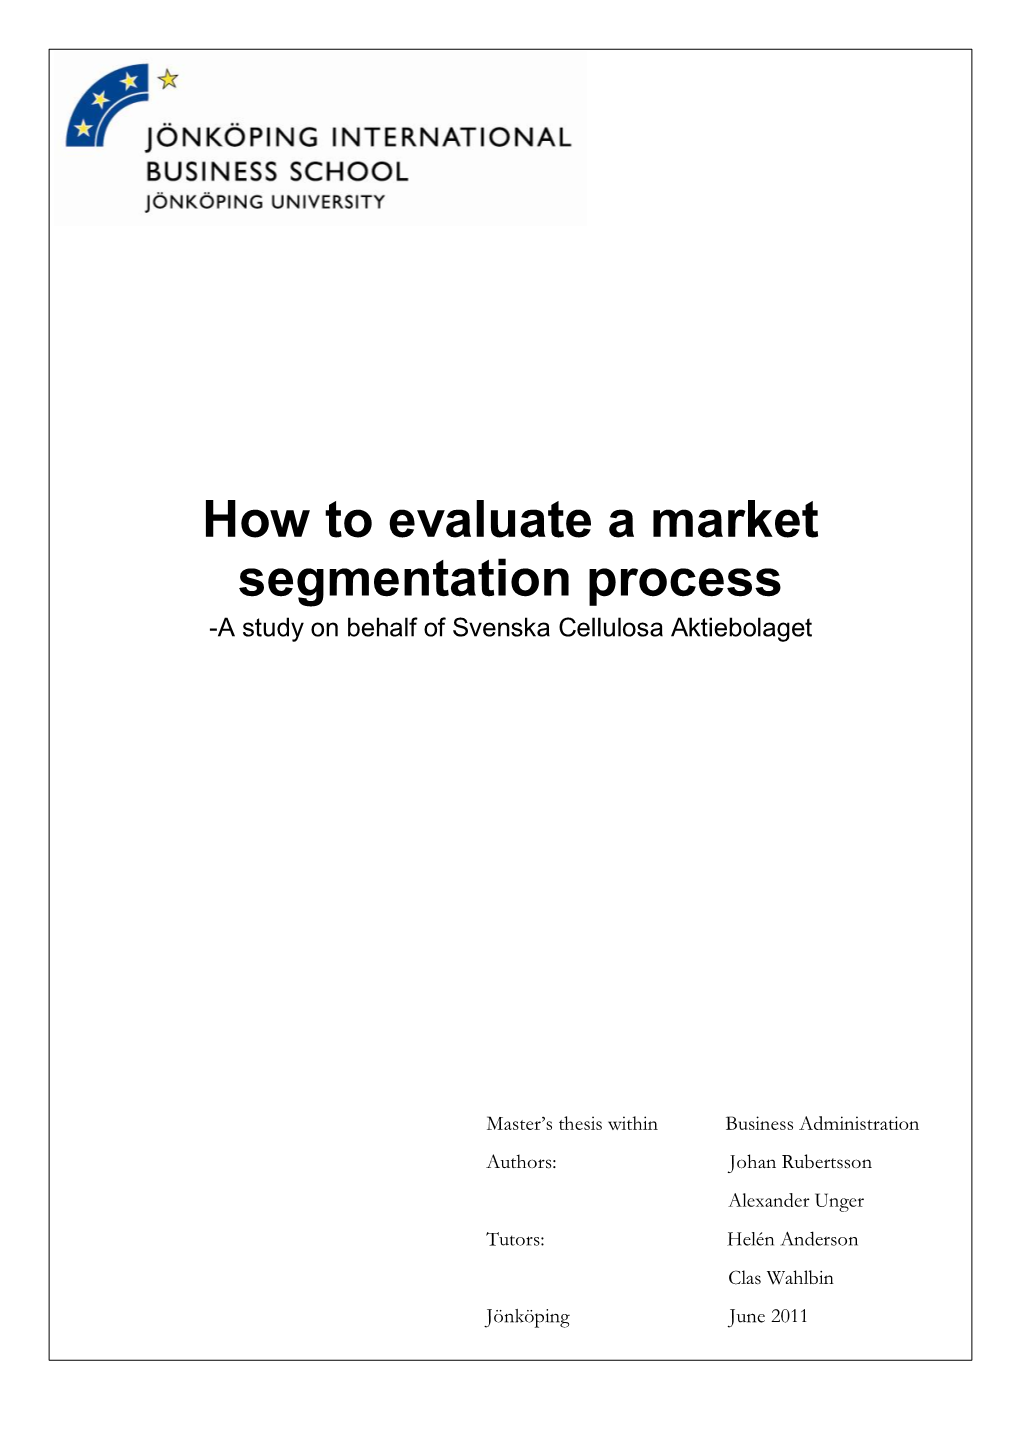 How to Evaluate a Market Segmentation Process -A Study on Behalf of Svenska Cellulosa Aktiebolaget